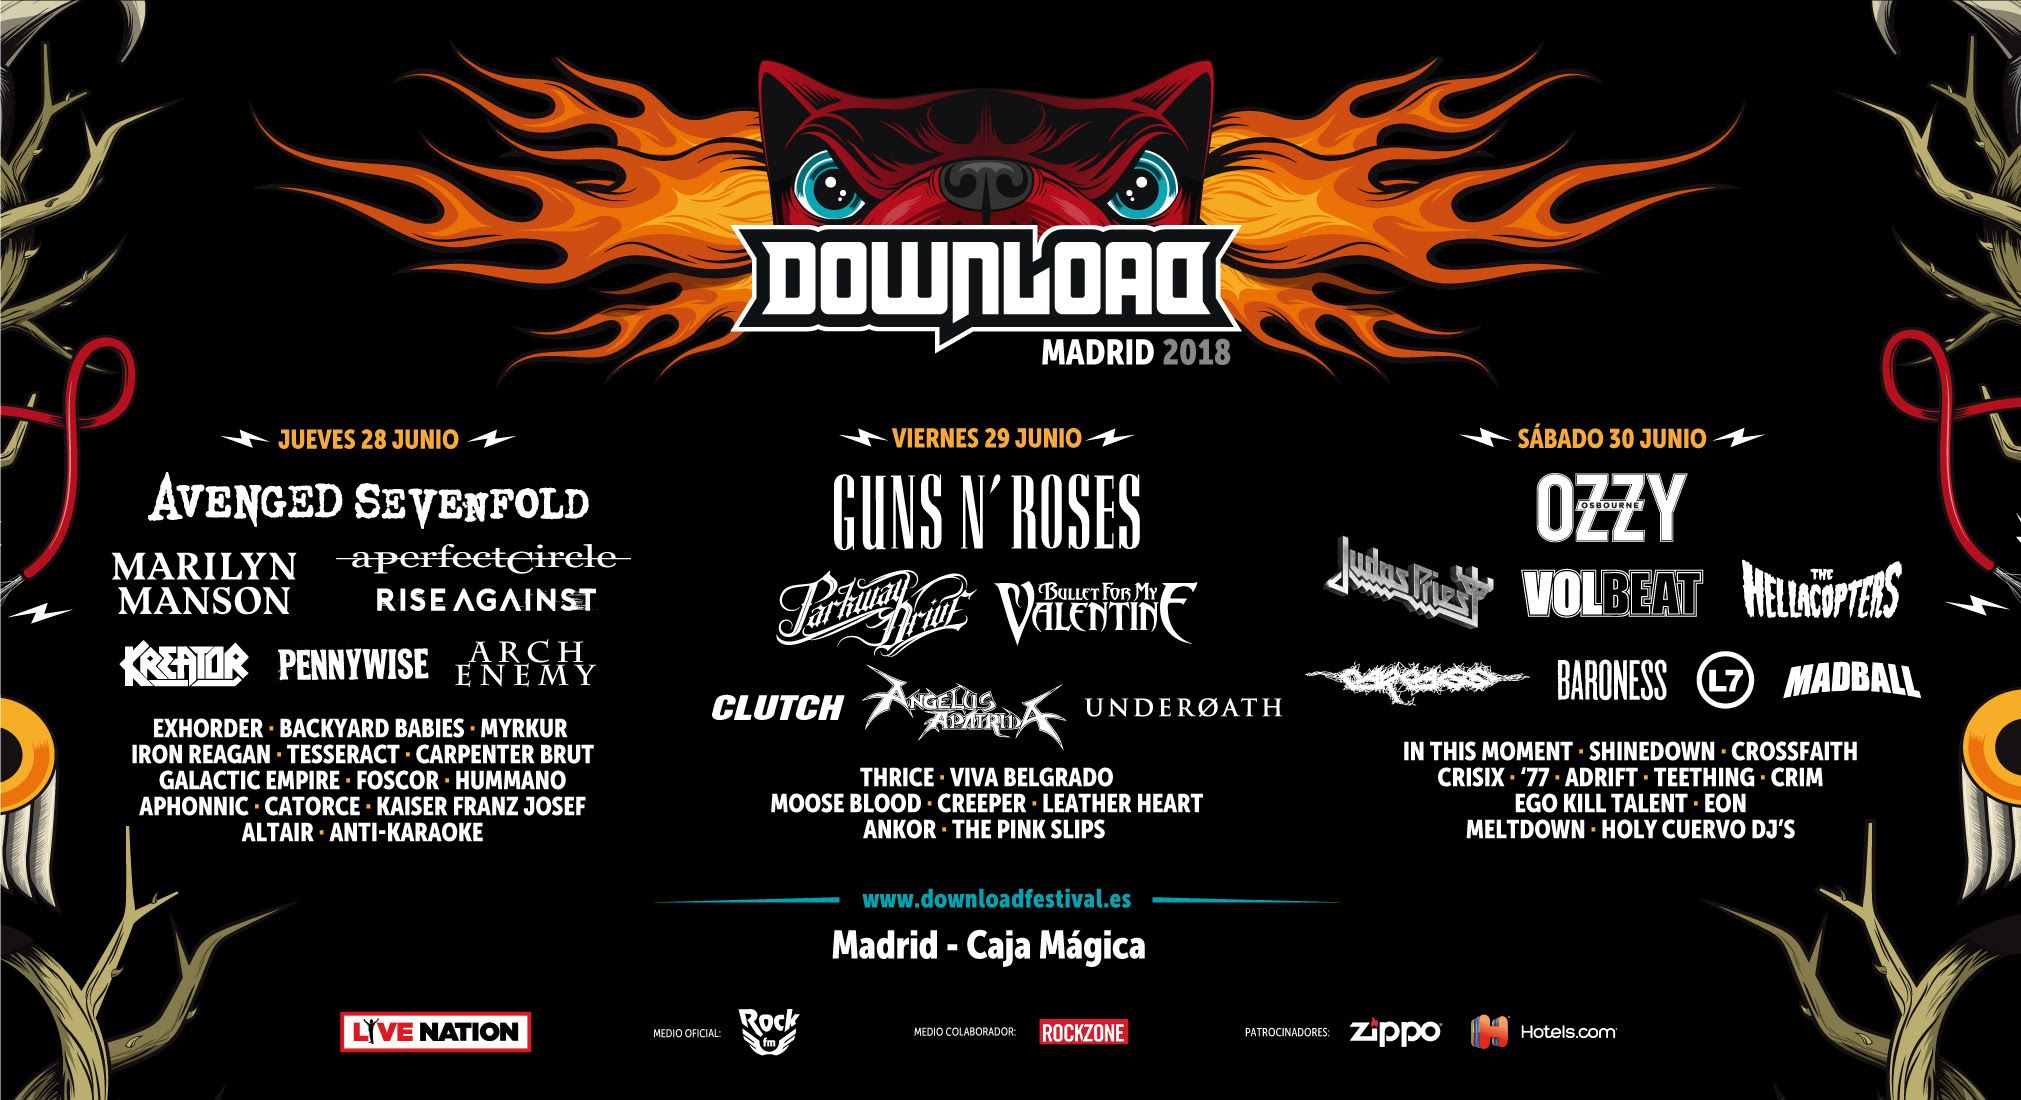 cartel definitivo del download festival madrid